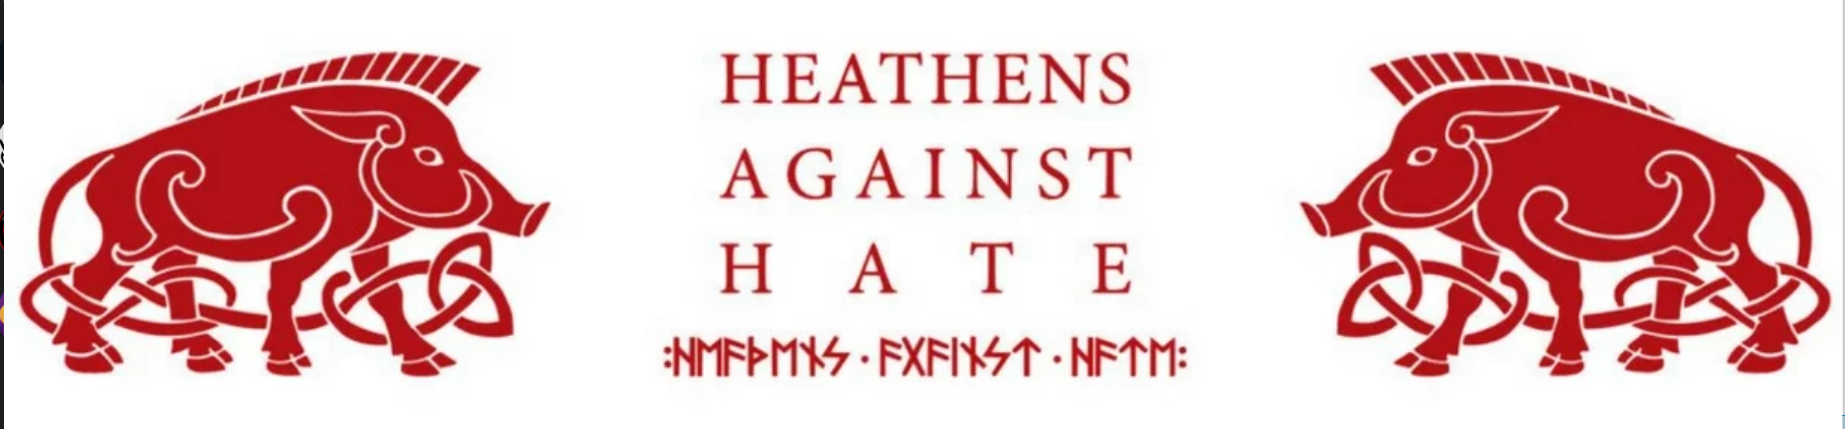 Heathens Against Hate.PNG